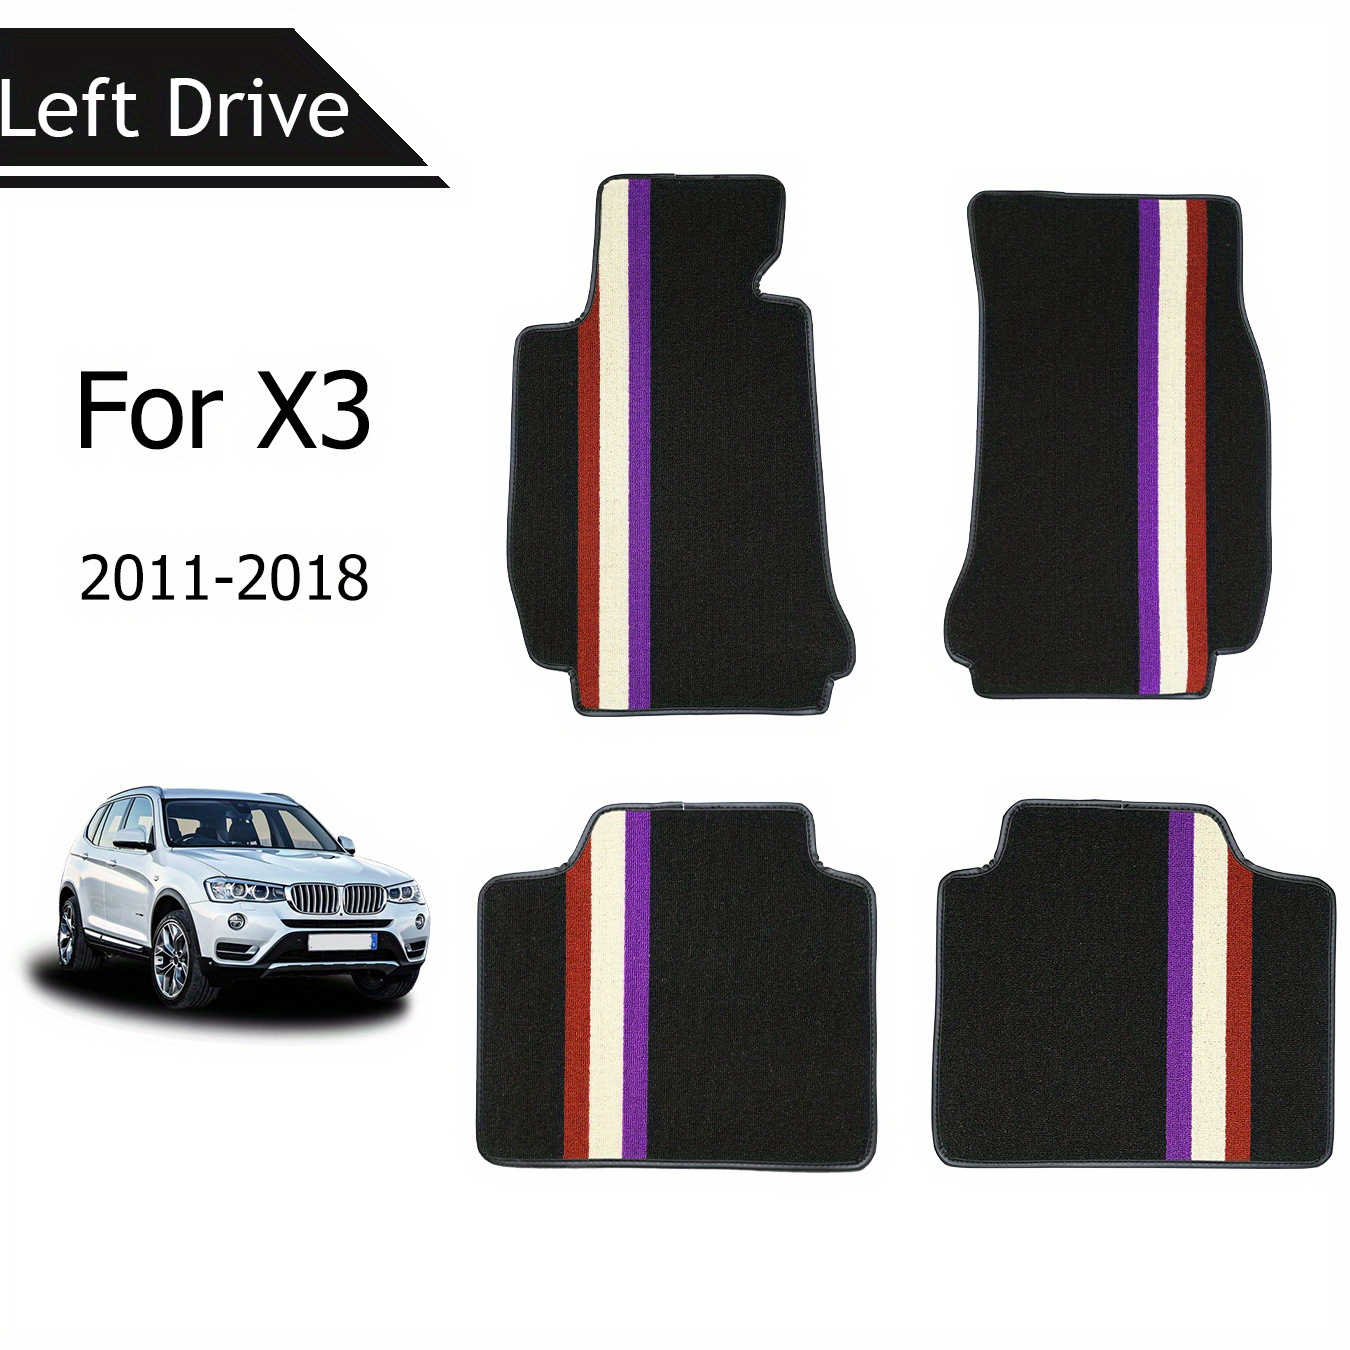 BMW X3 Floor Mats—Car and Driver